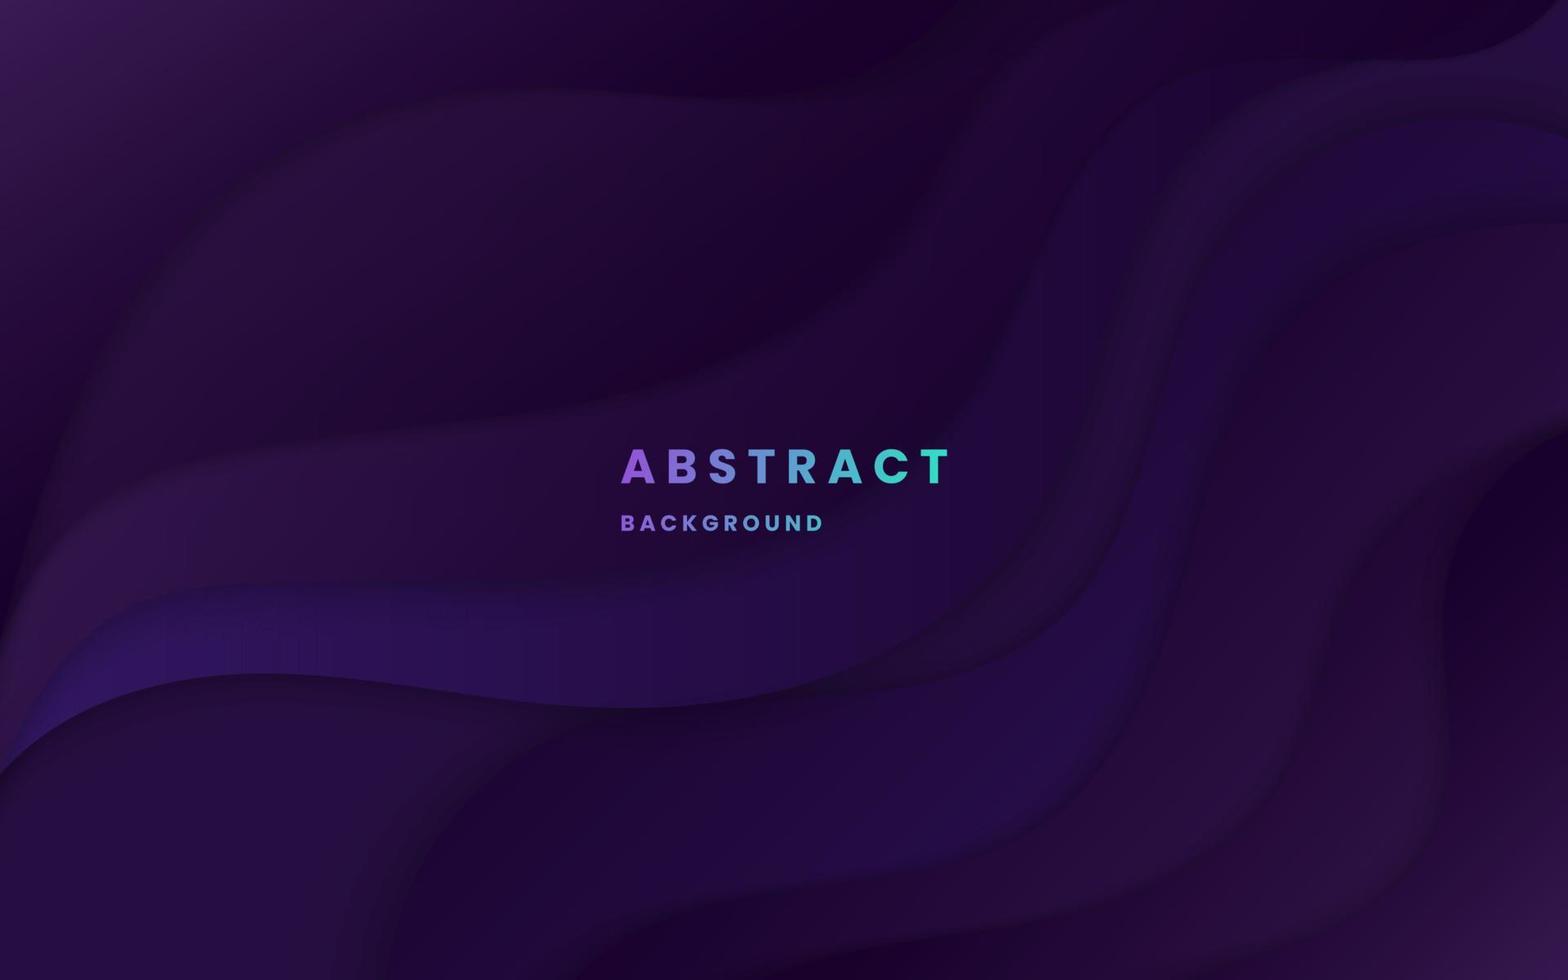 Abstract purple and black background. gradient shapes composition.  modern elegant design background. illustration vector 10 eps.